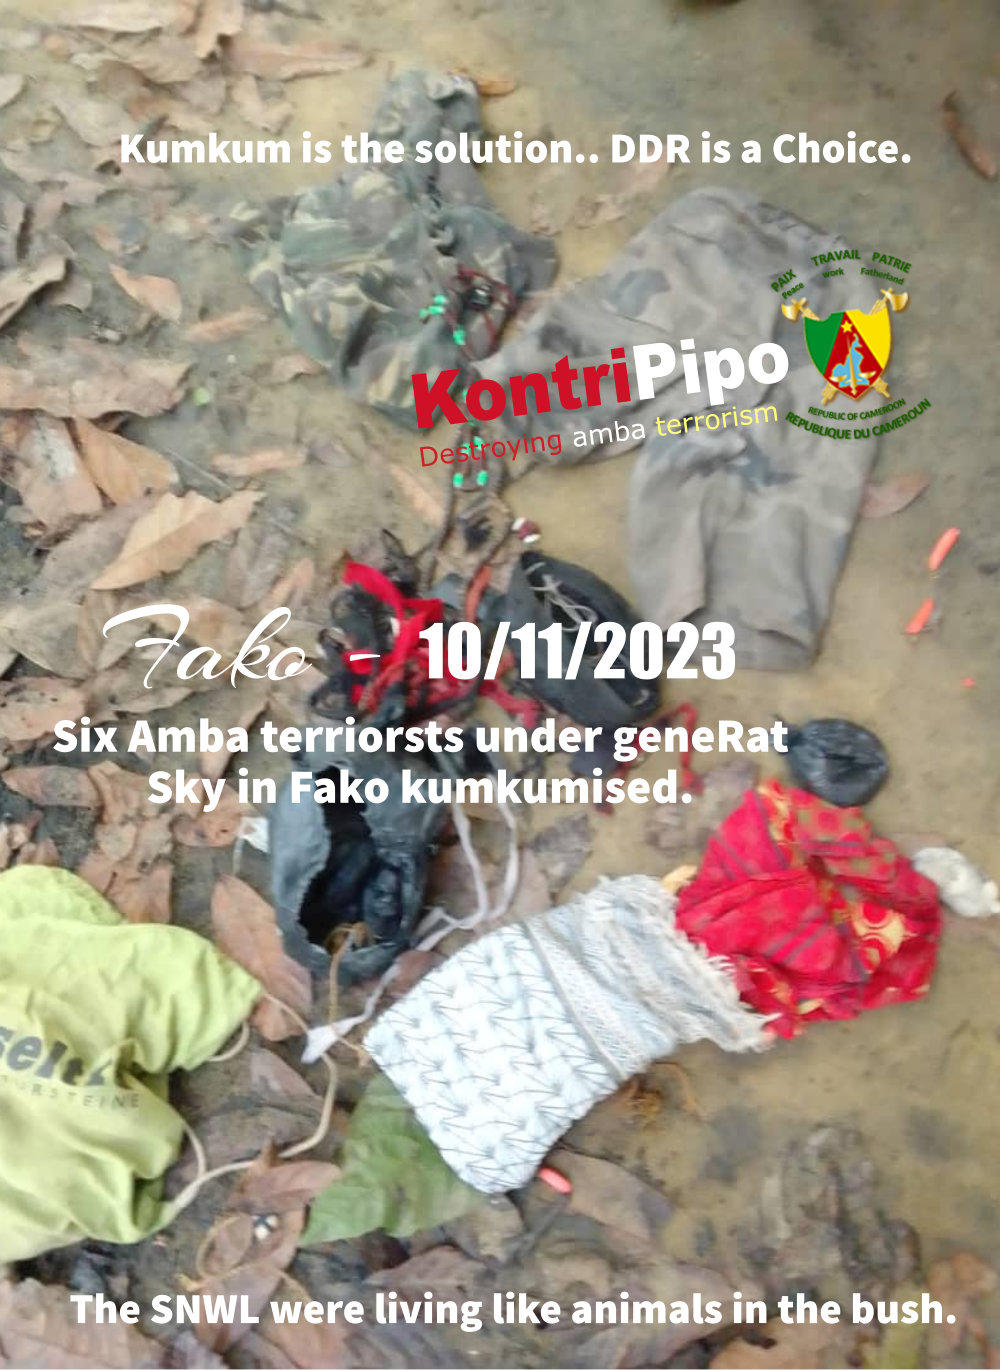 6 amba terrorists under generat Sky of #Fako kumkumised 10 Nov 2023